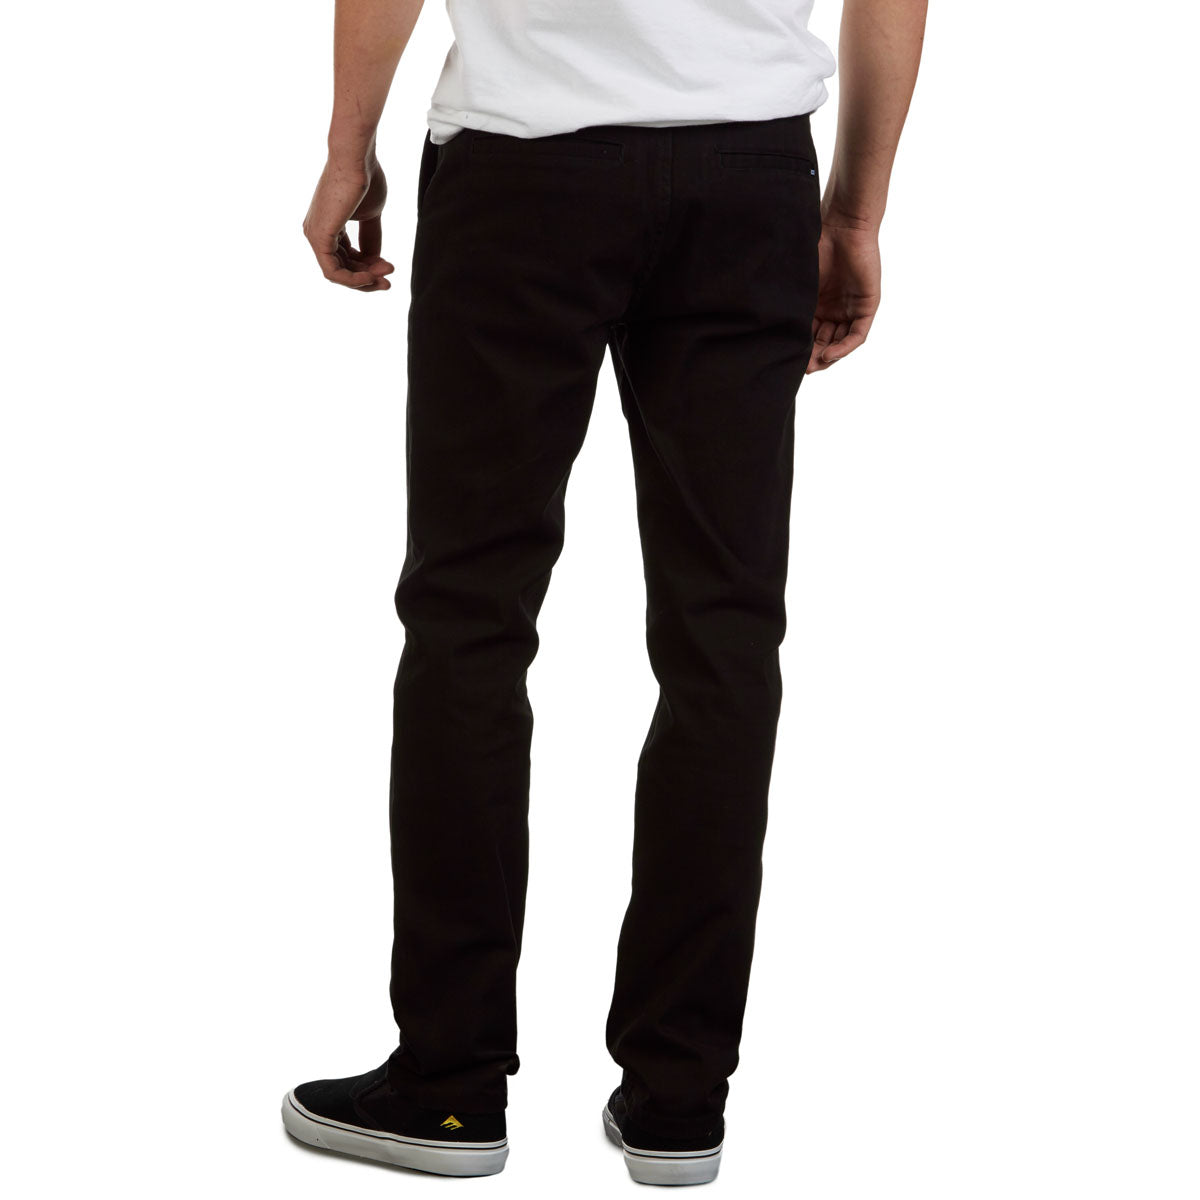 CCS Standard Plus Slim Chino Pants - Black image 3